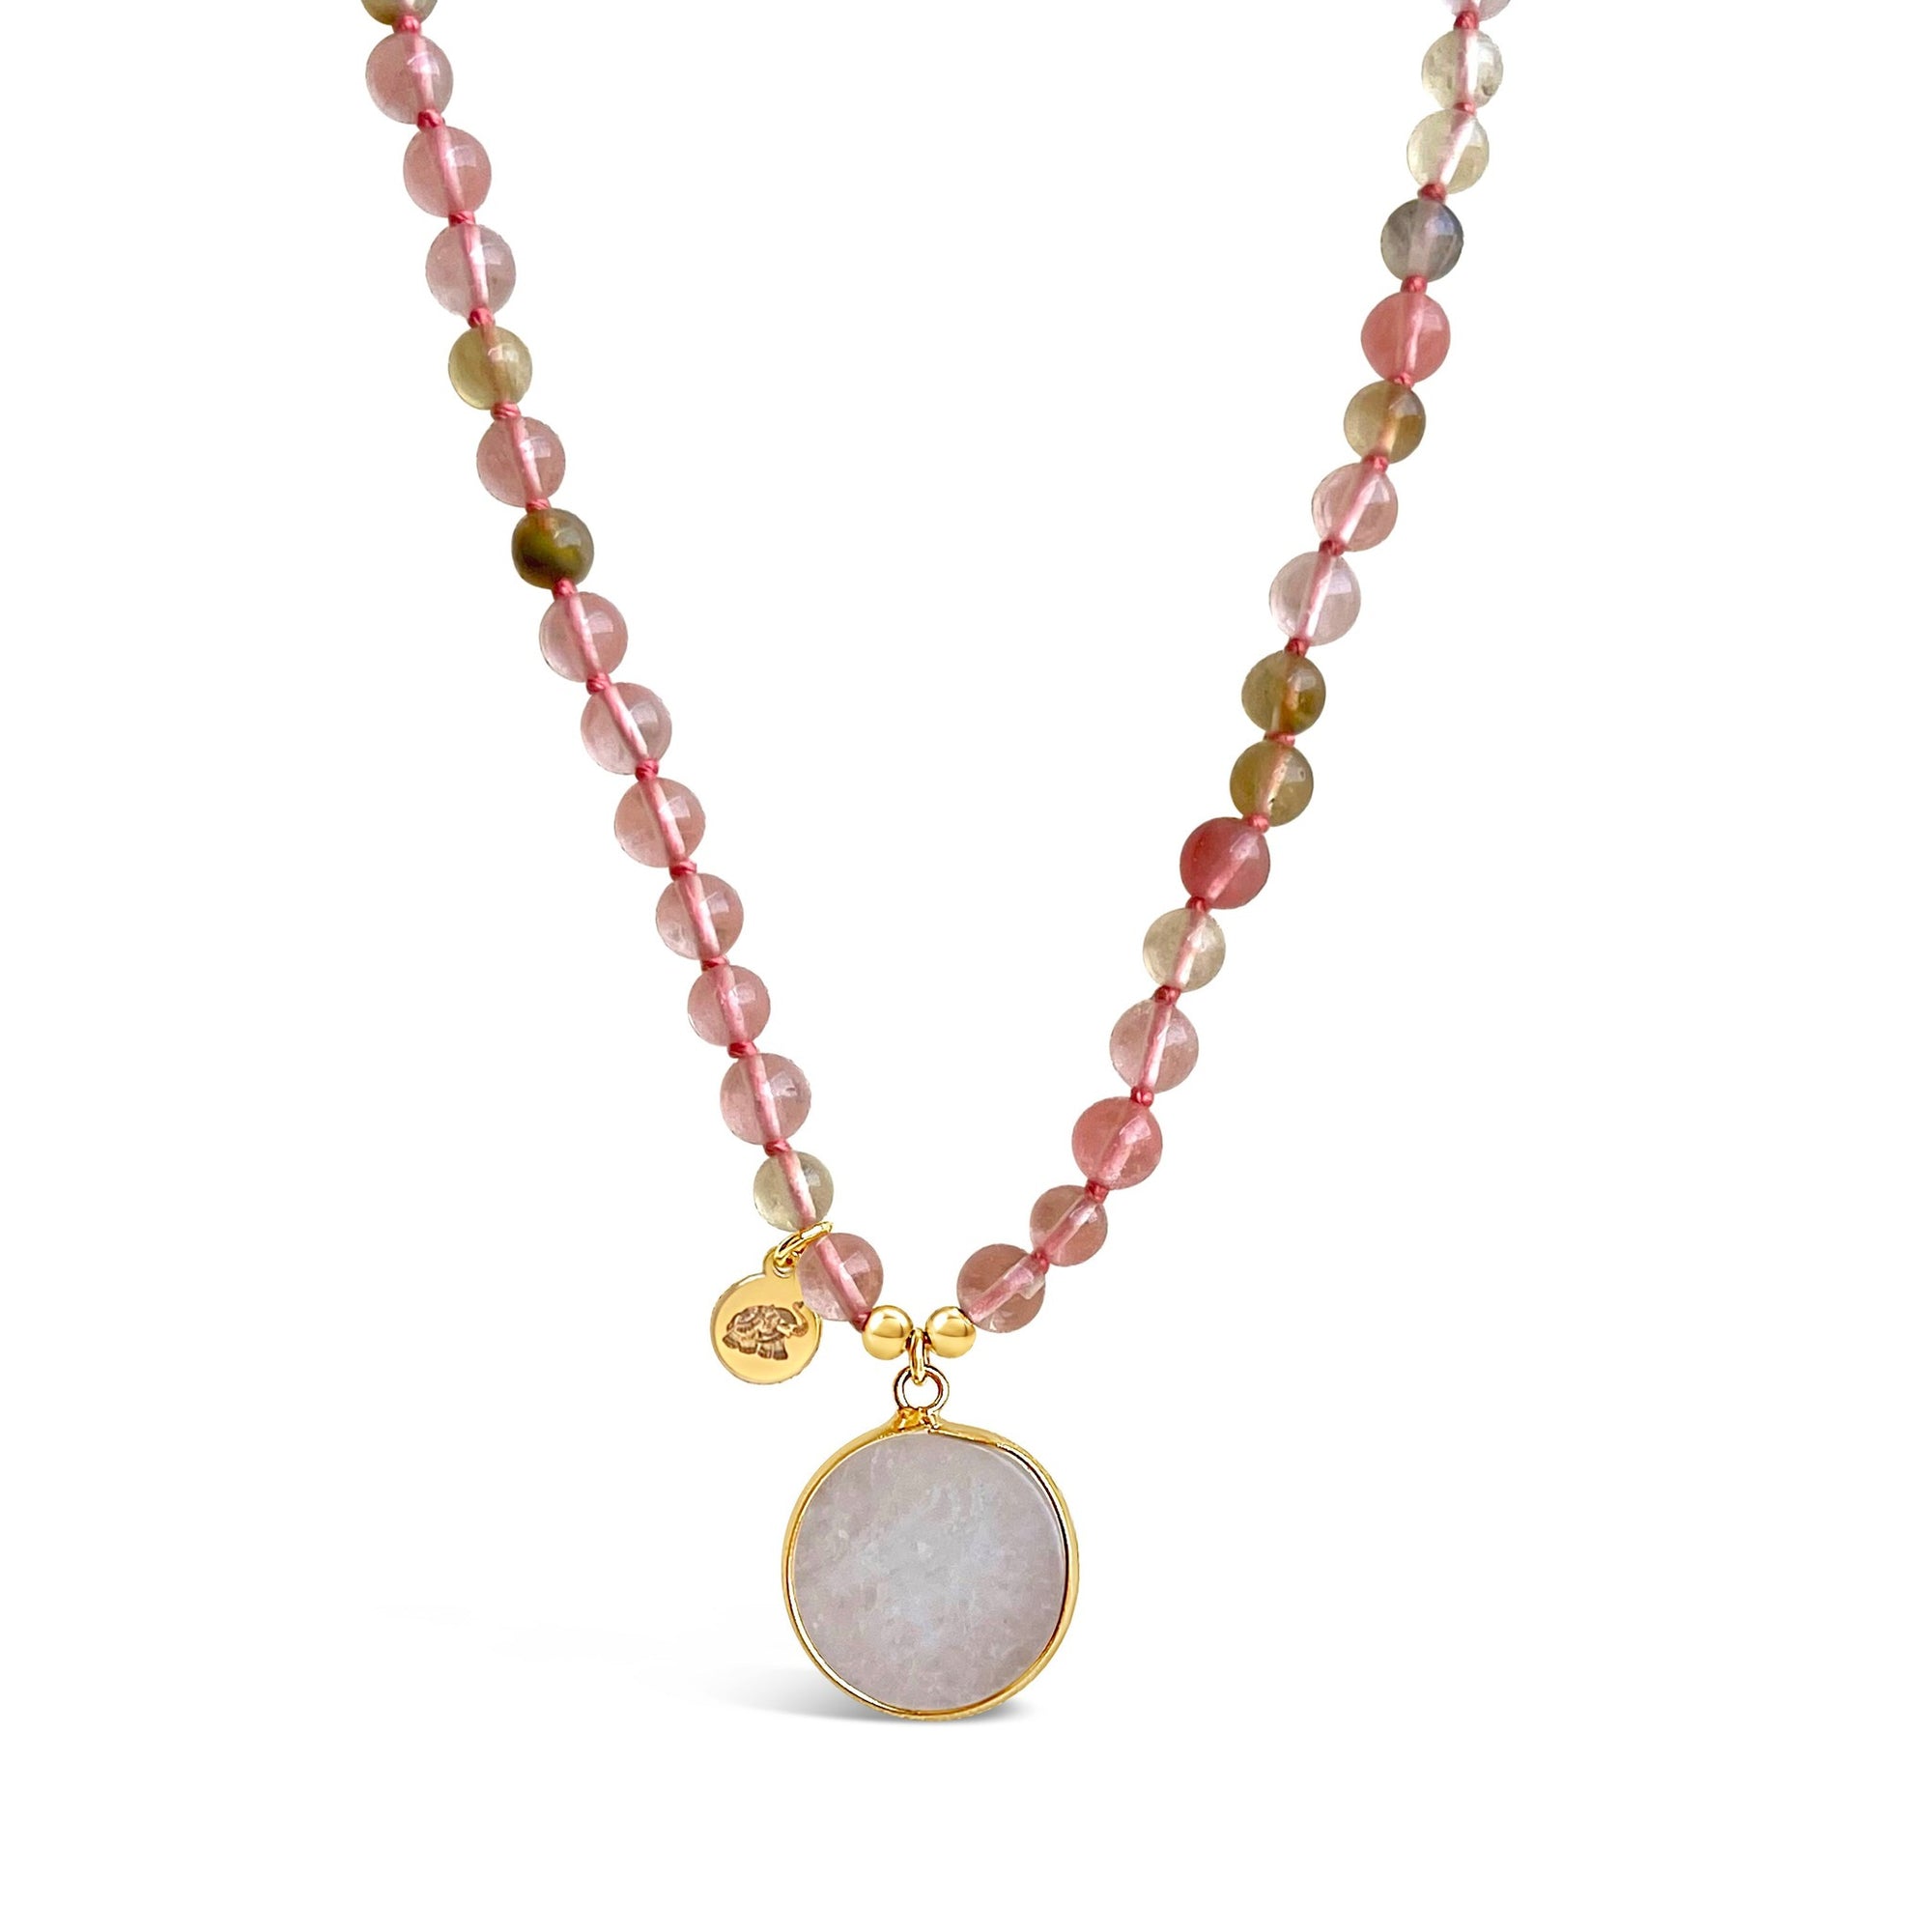 Rose pendant mala prayer bead necklace